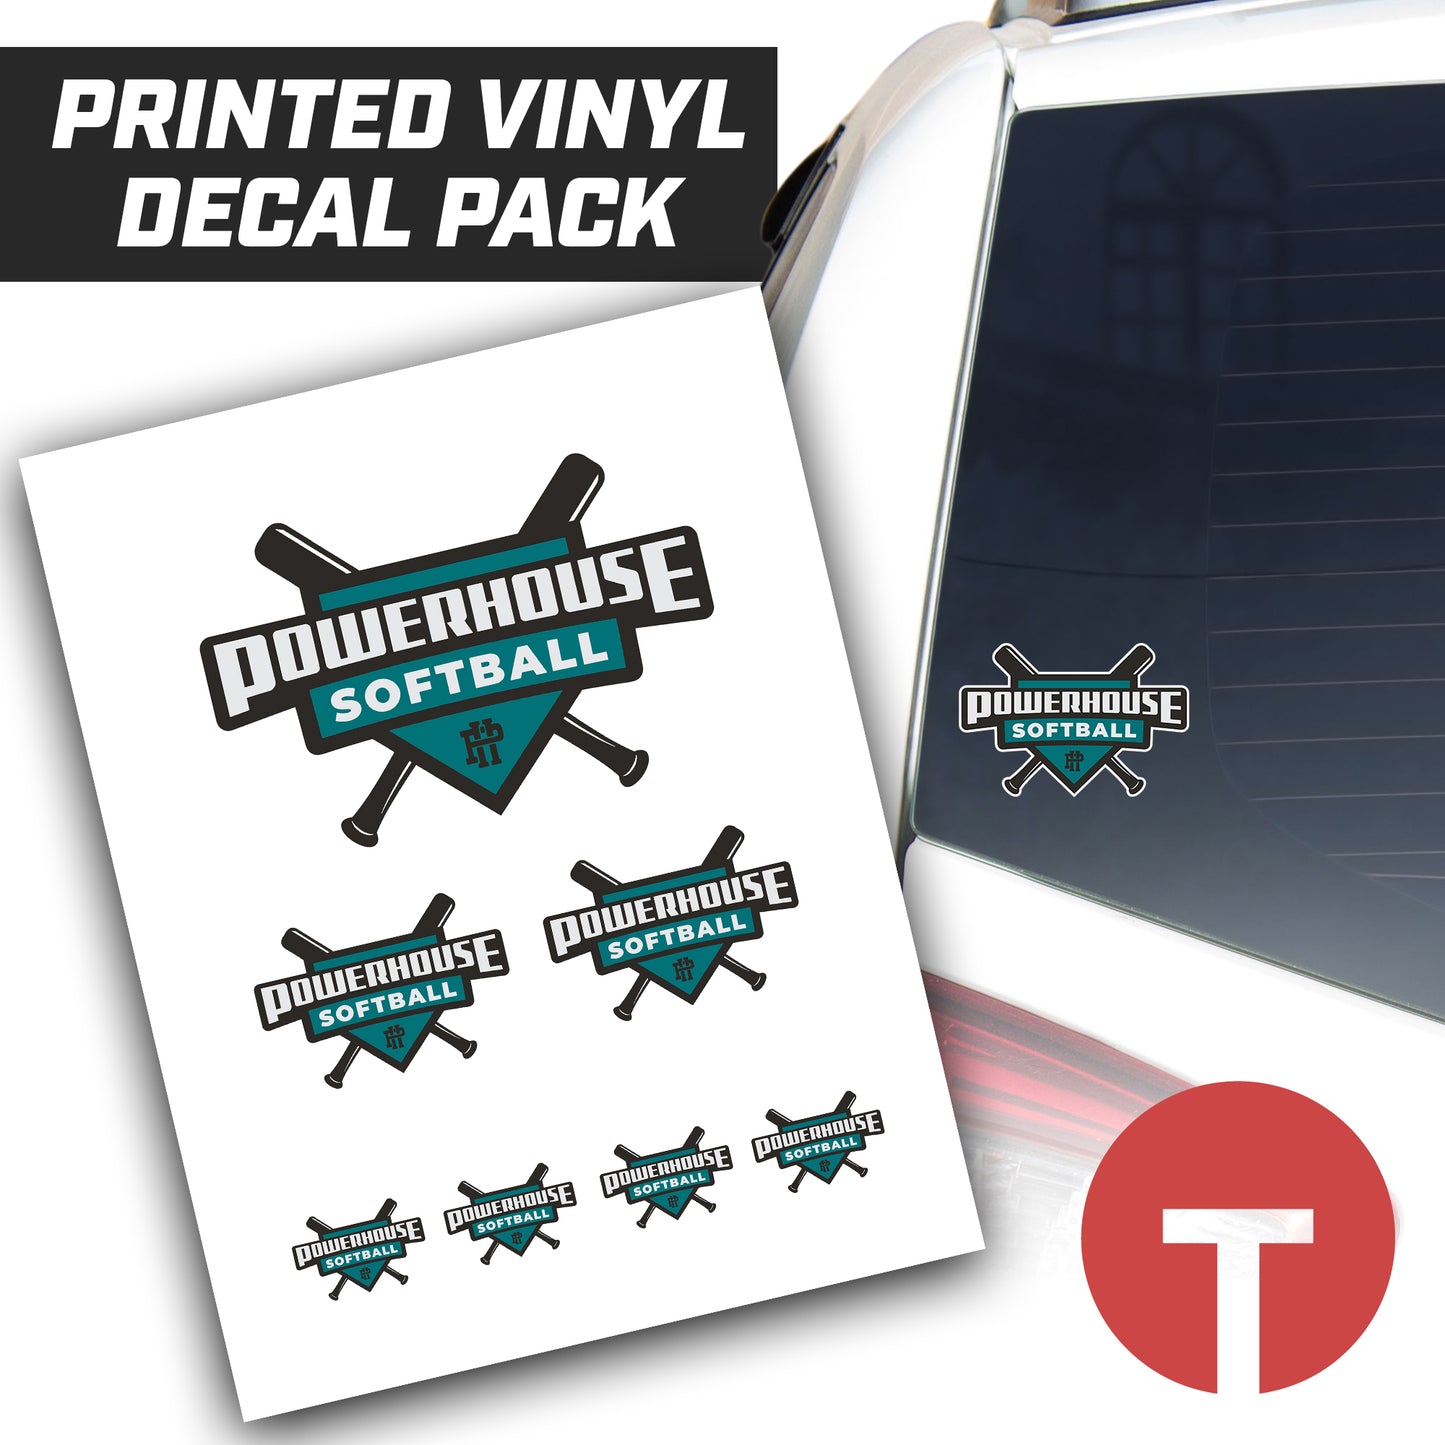 Powerhouse Softball - Logo Vinyl Decal Pack